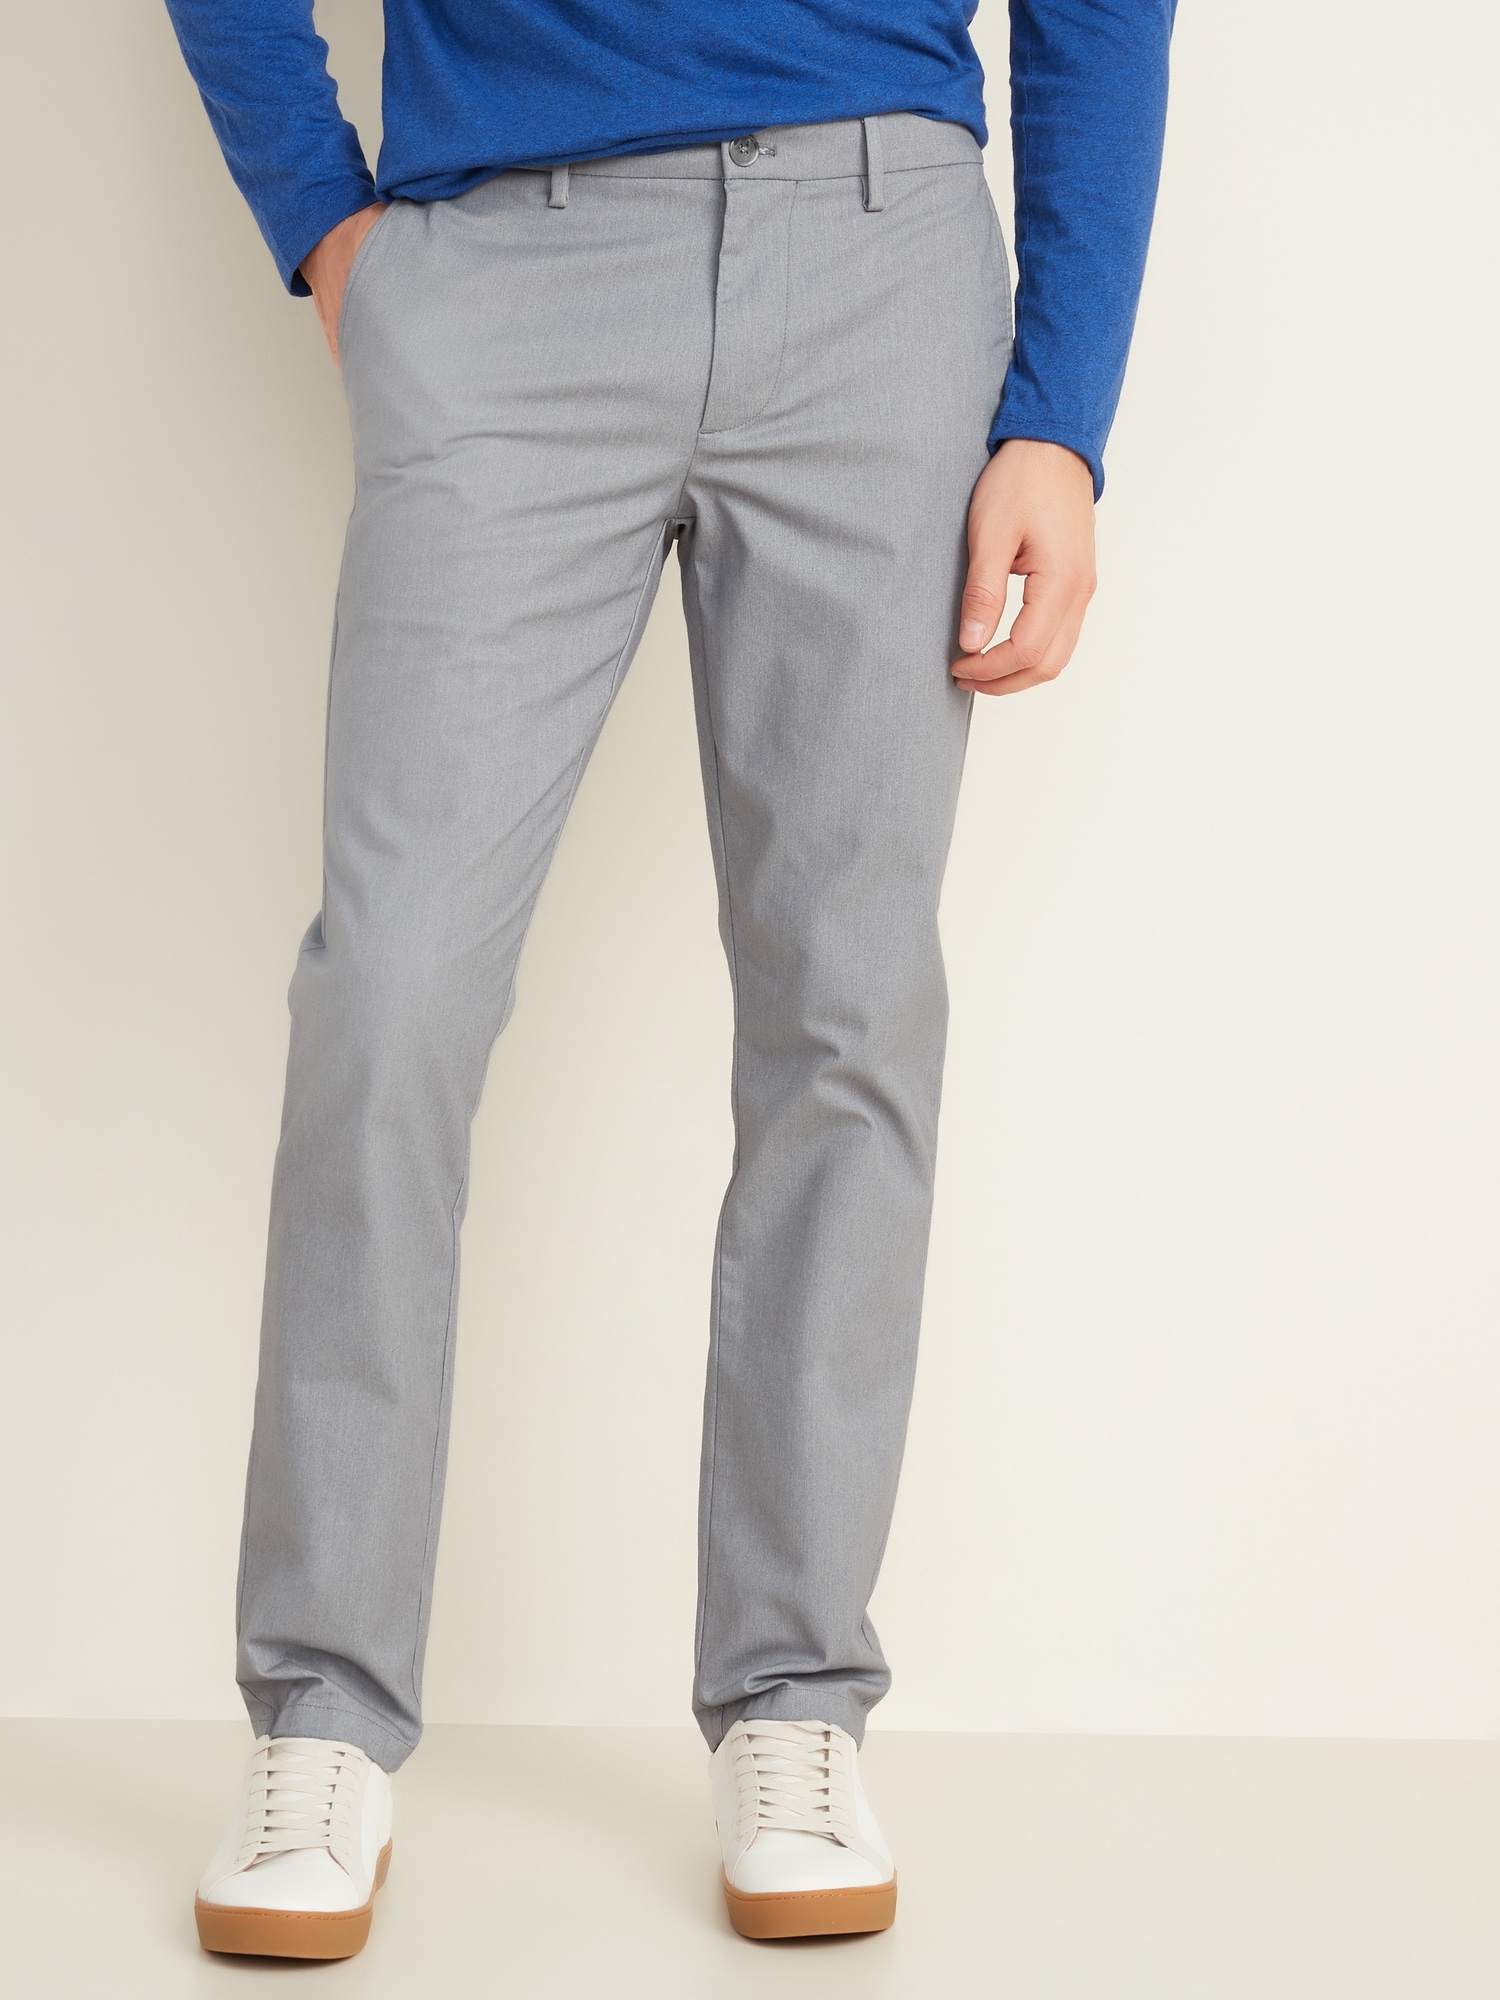 Slim Ultimate Built-In Flex Textured Chino Pants